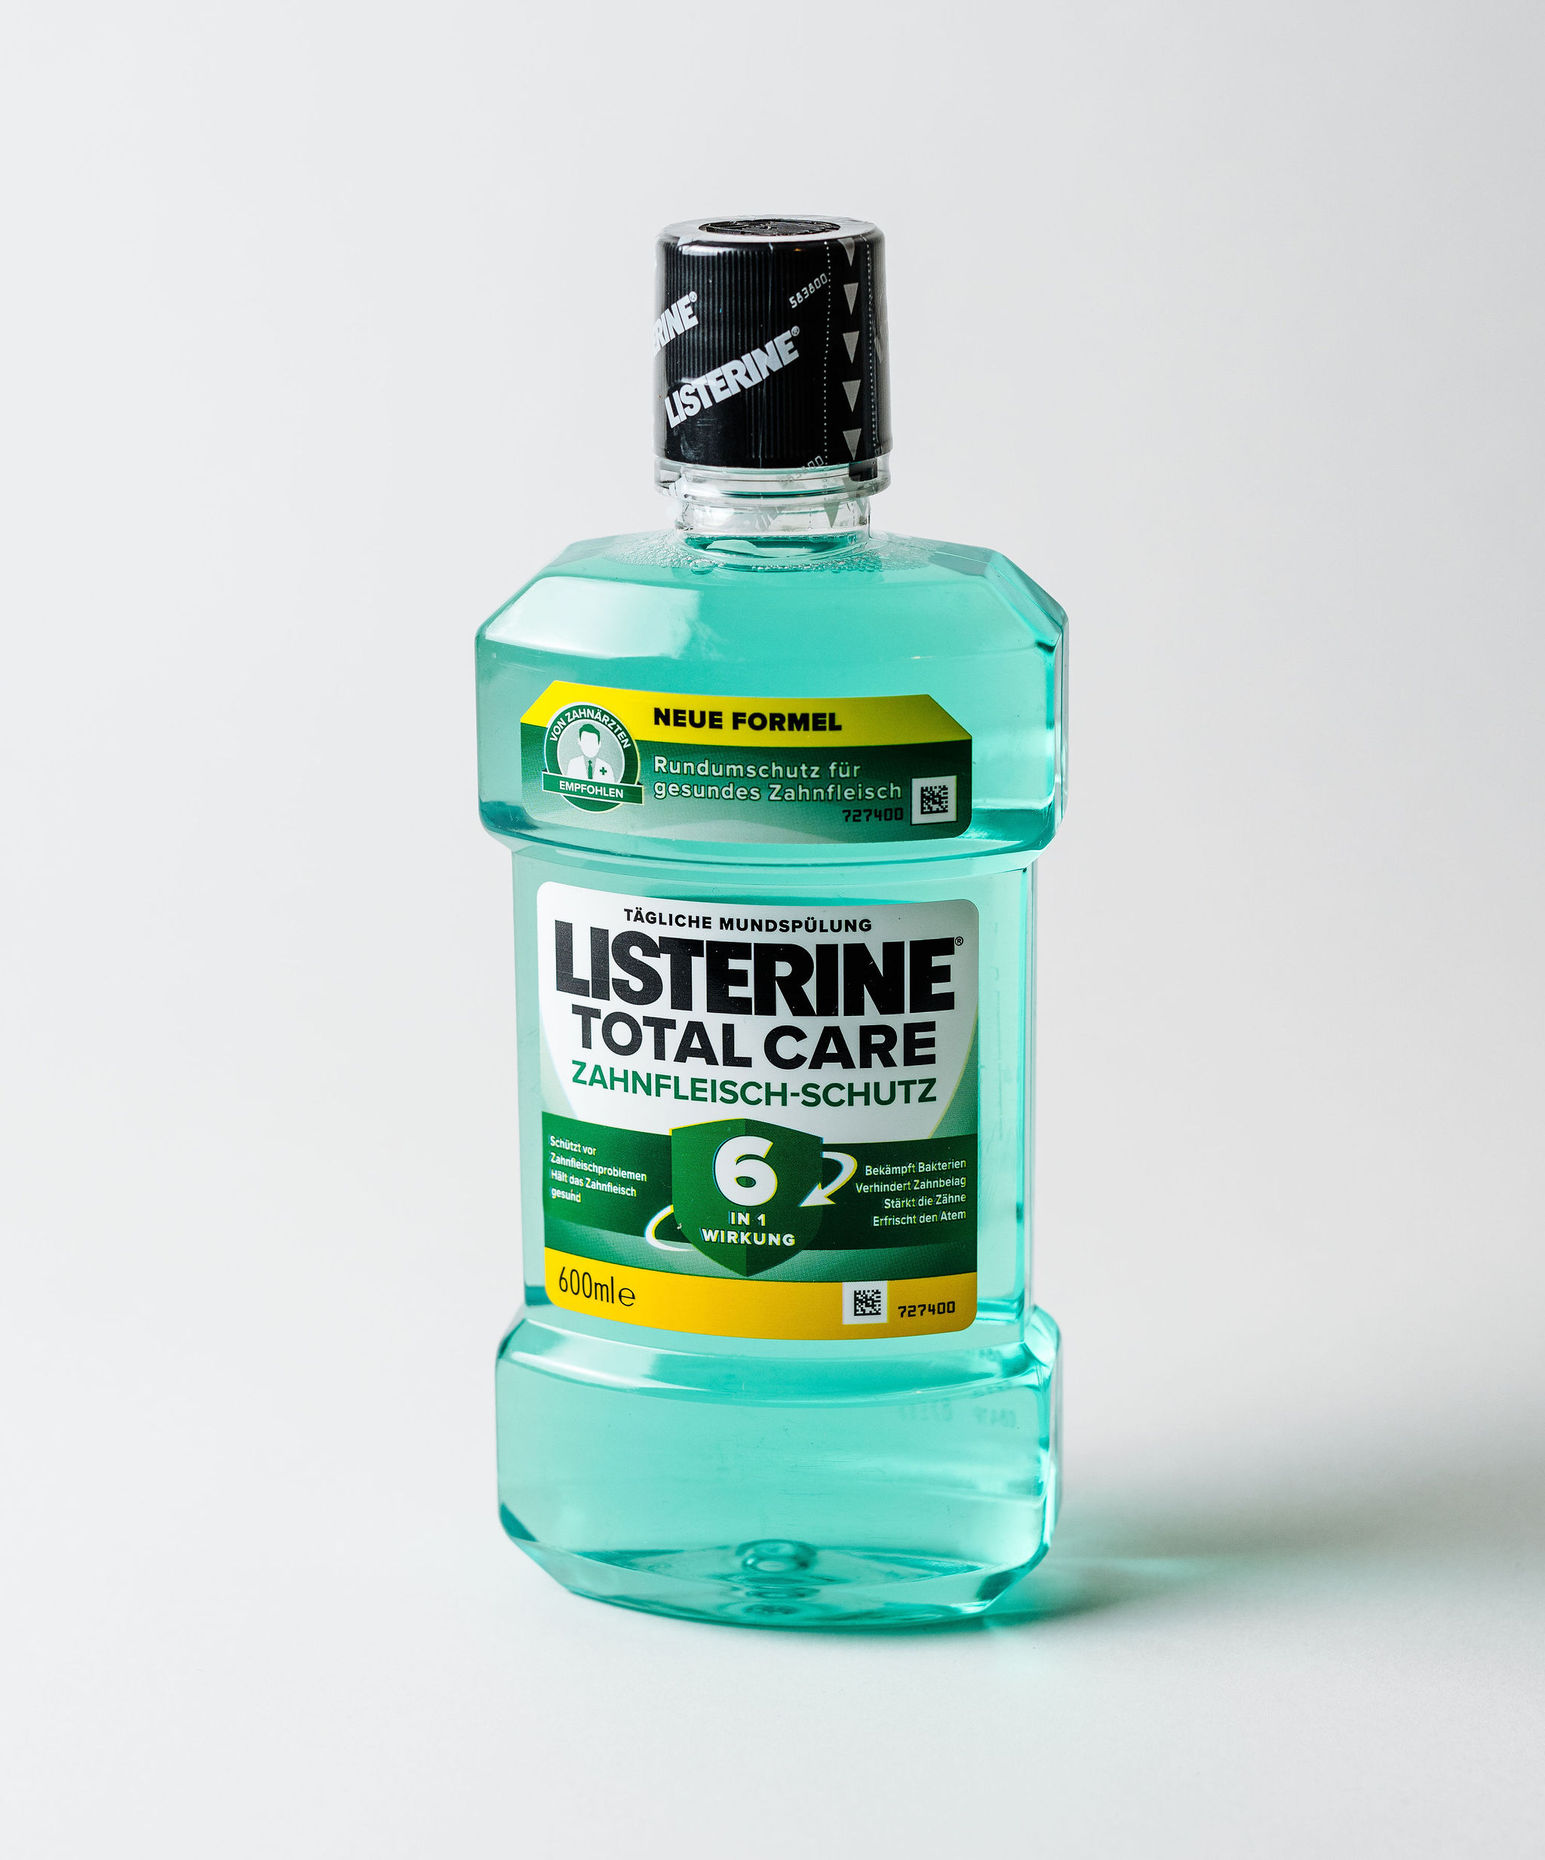 Listerine Mouthwash Total Care